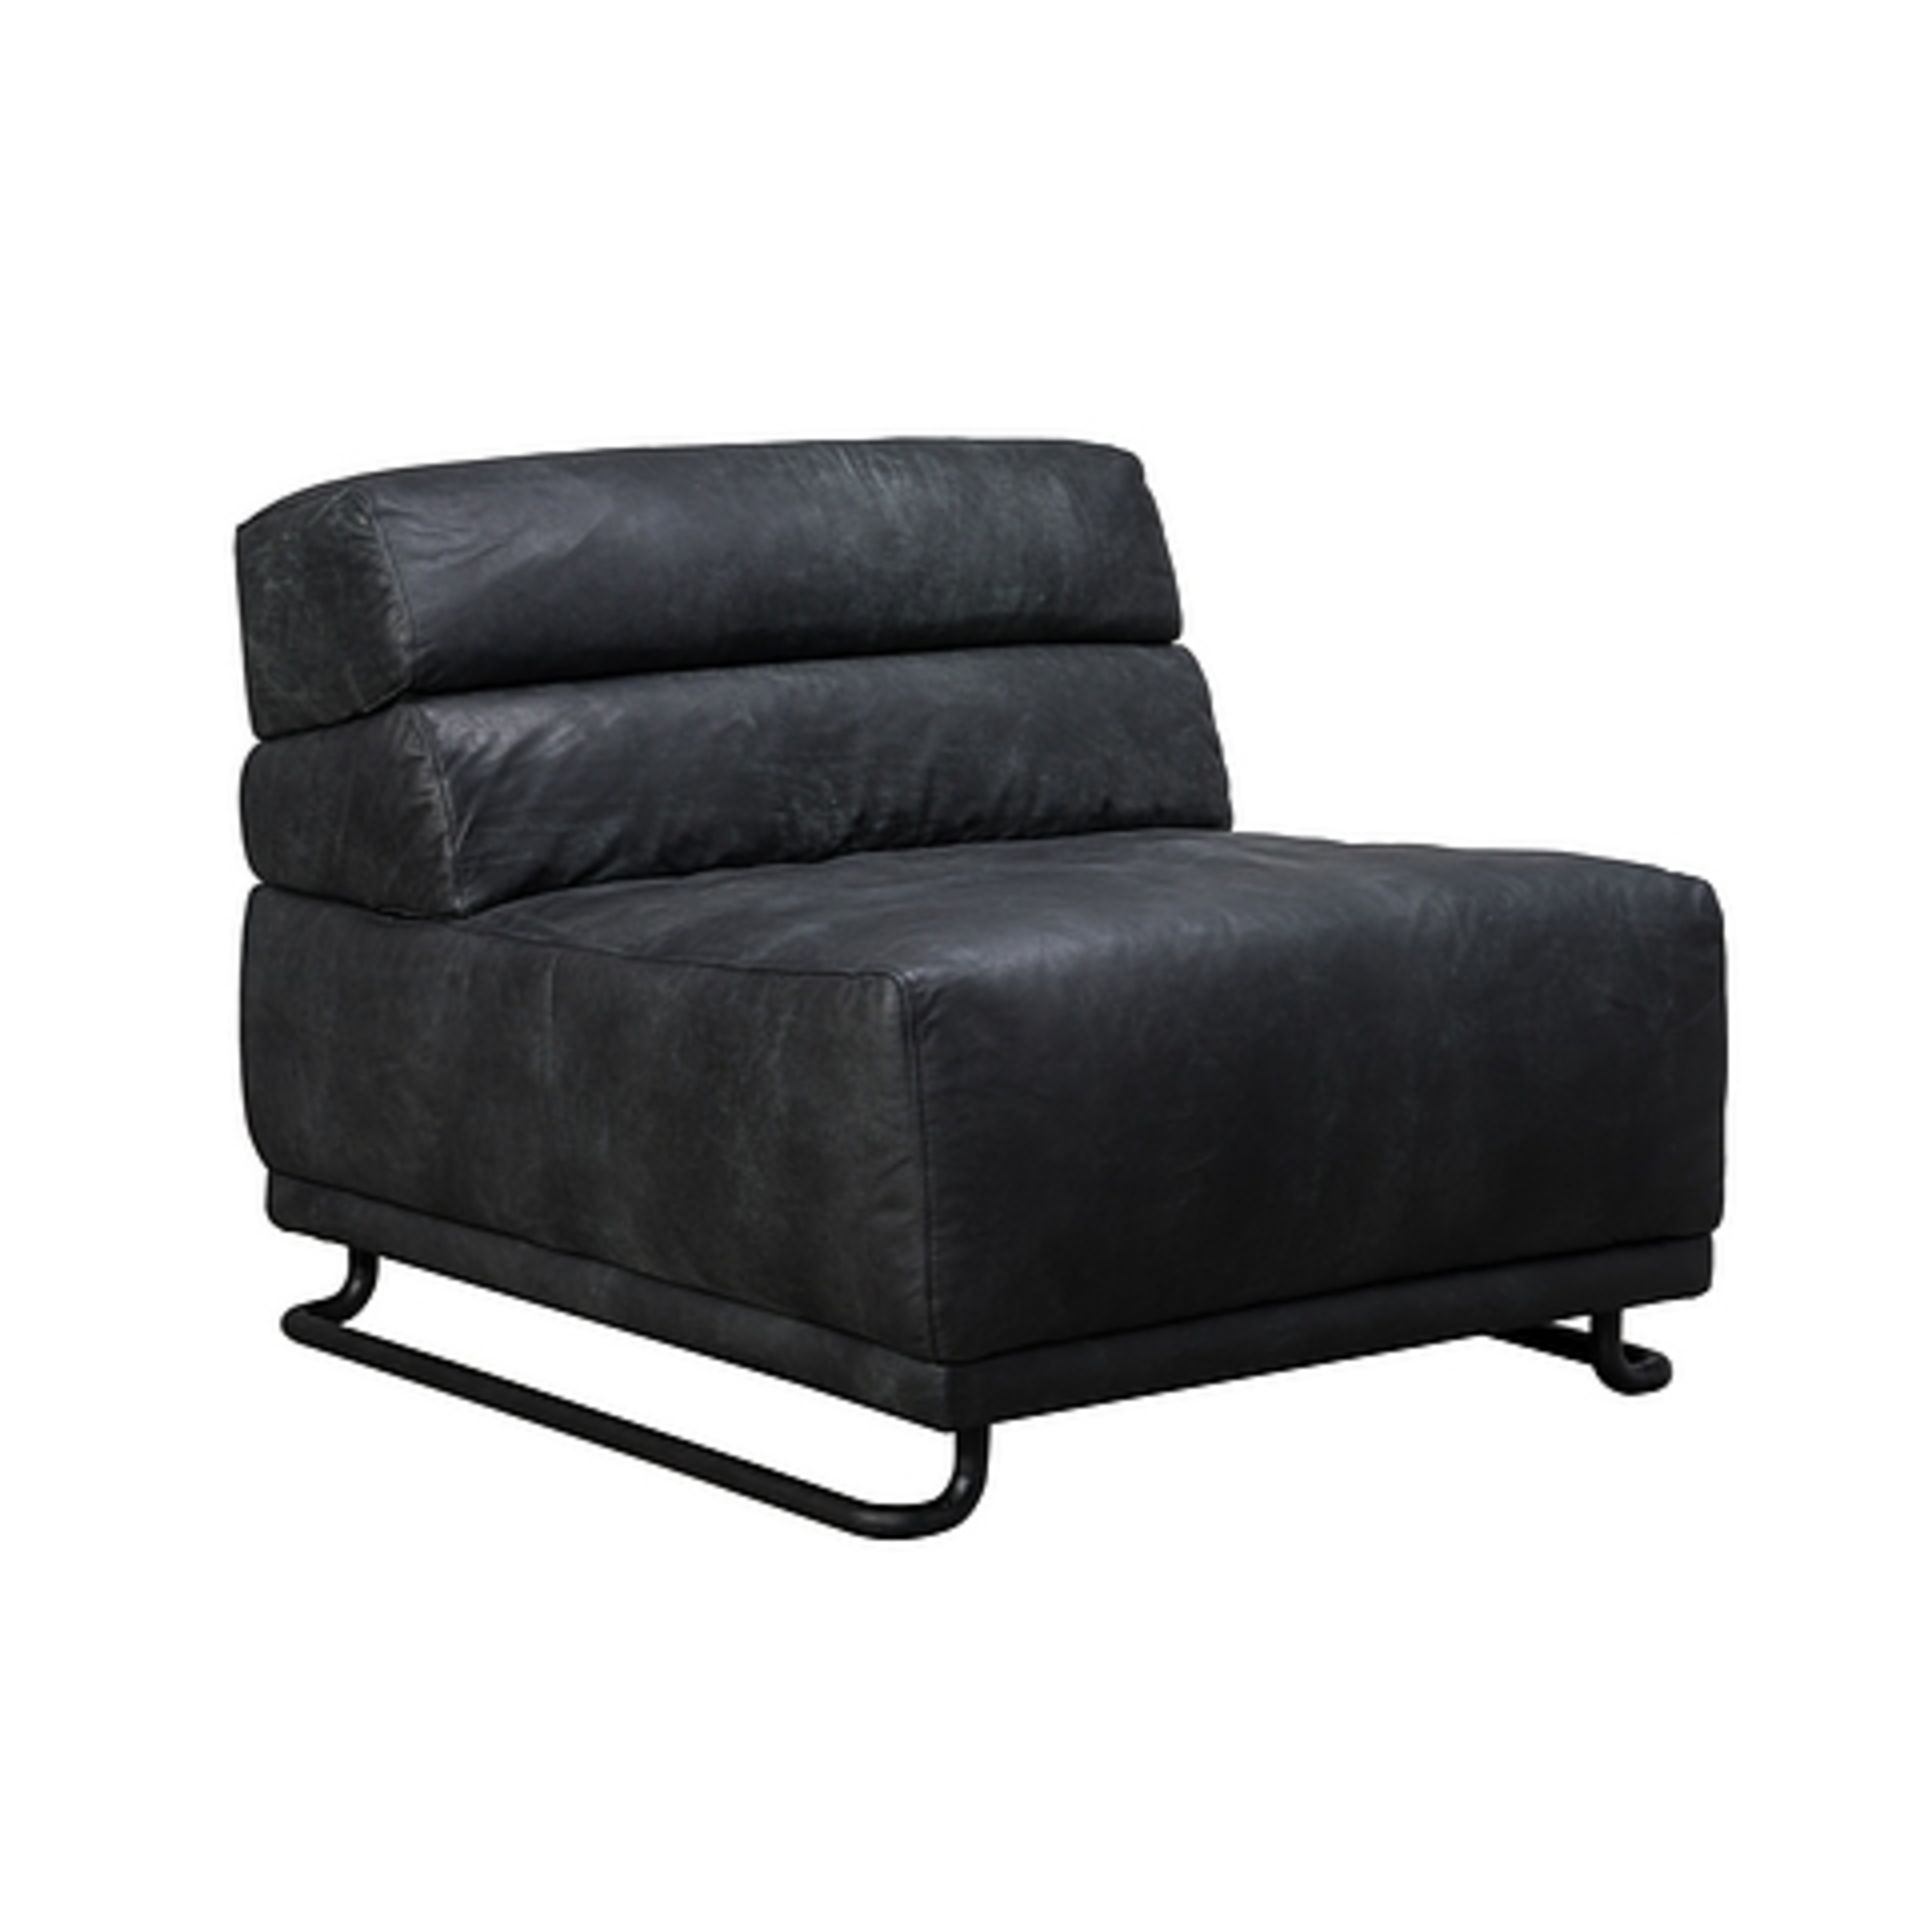 Jaba Sofa 1 Seater Plonge Slate & Matt Black 83x96.5x71cm RRP £ 1941